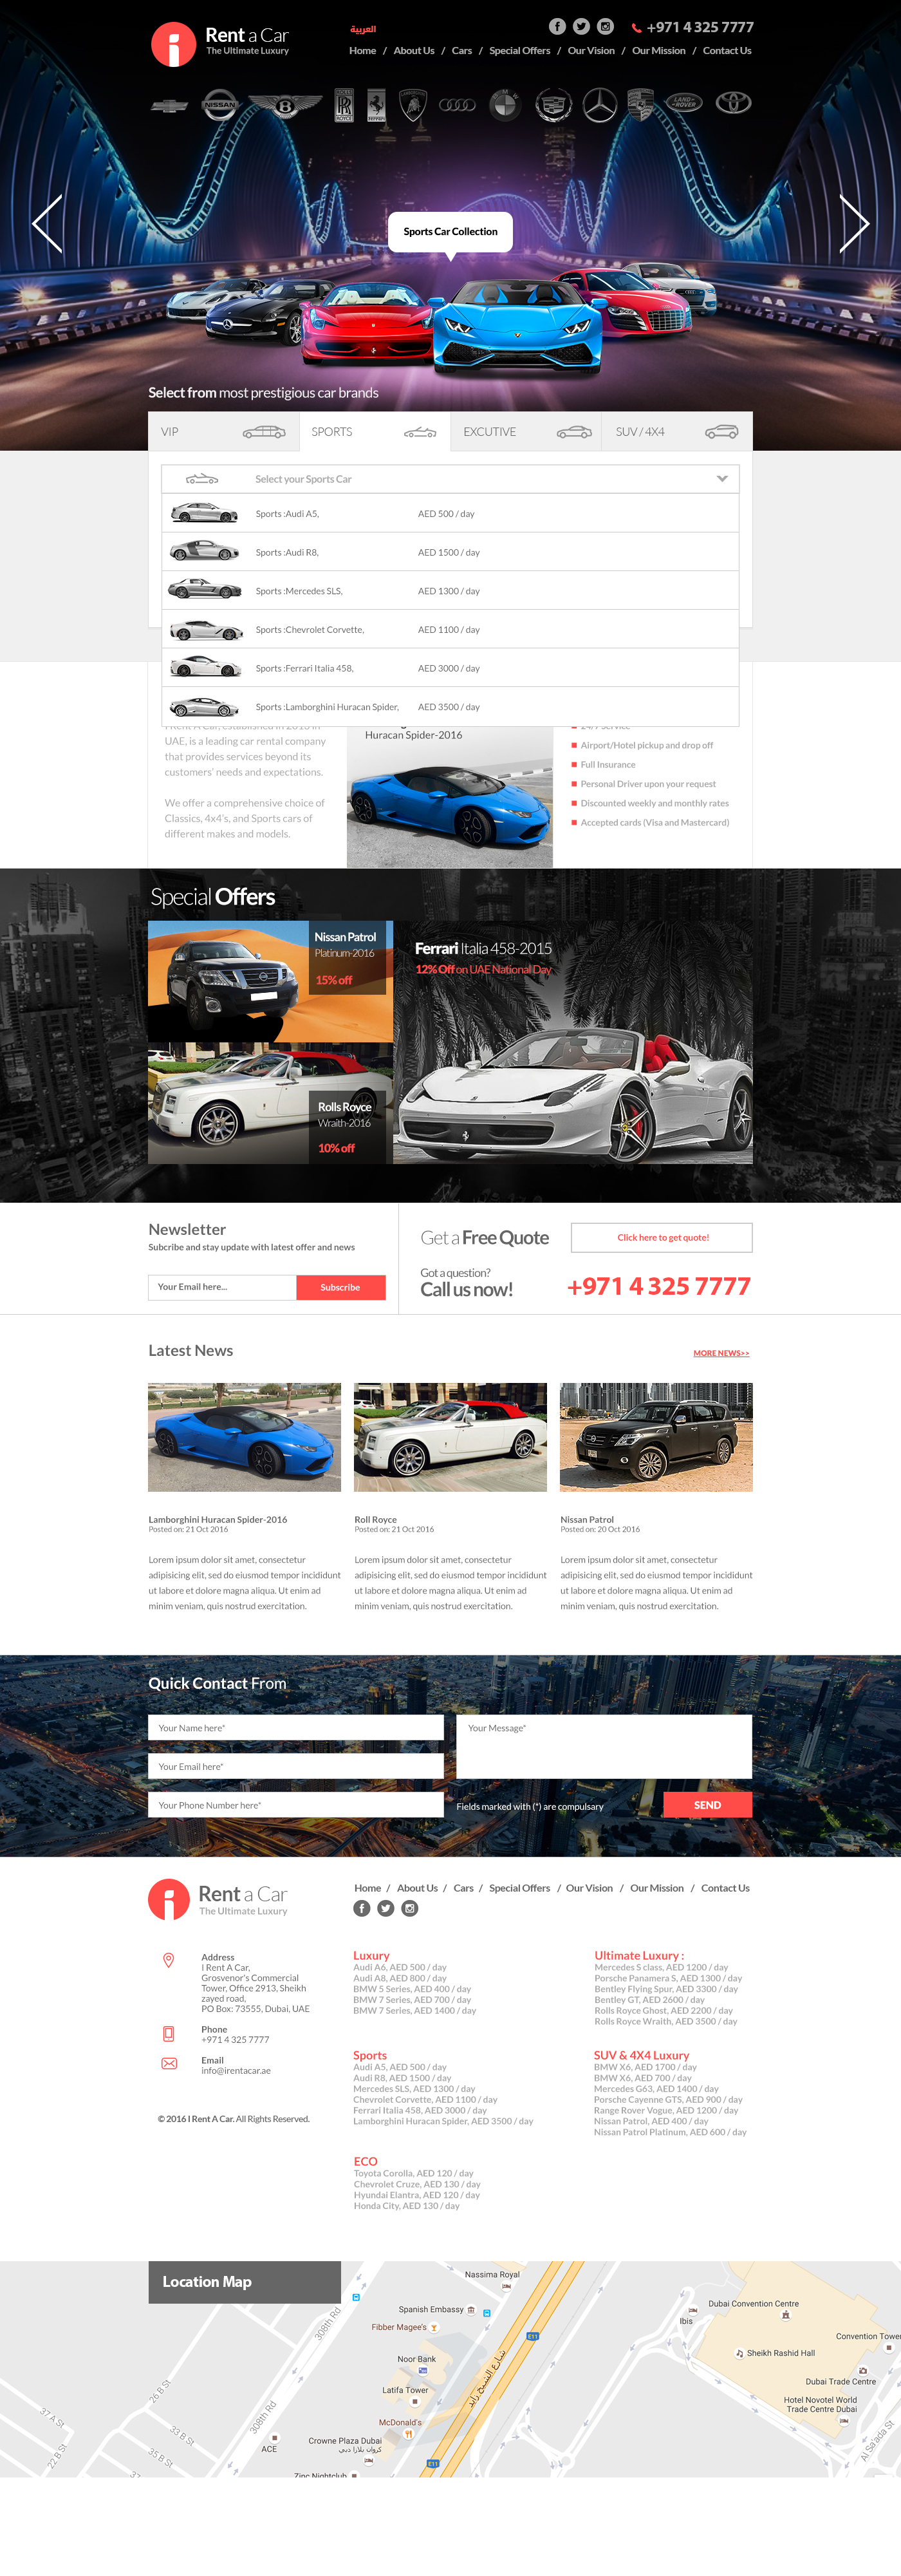 rent a car lamborghini mercedes user experience user interface design Porsche dubai Web designer web design dubai